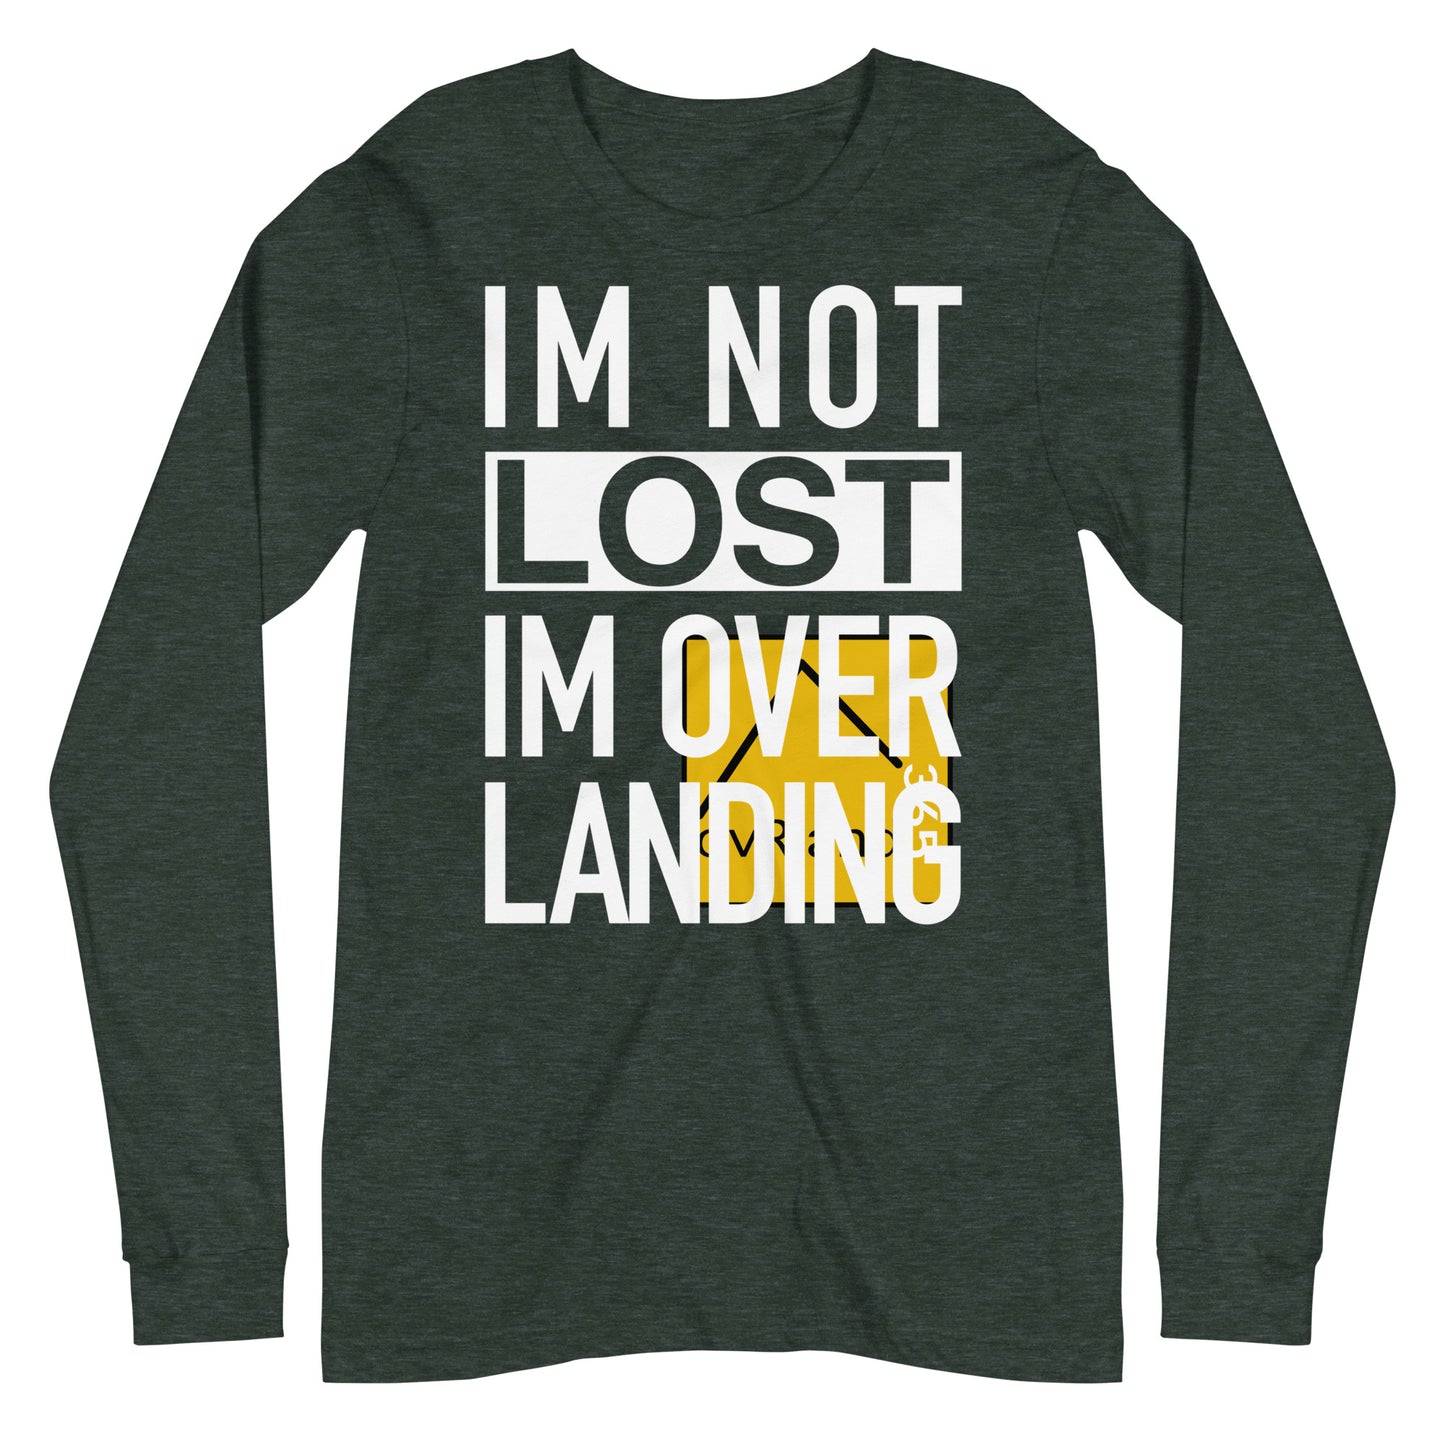 IM NOT LOST IM OVER LANDING - Forest long-sleeve. logo misprint. overland365.com